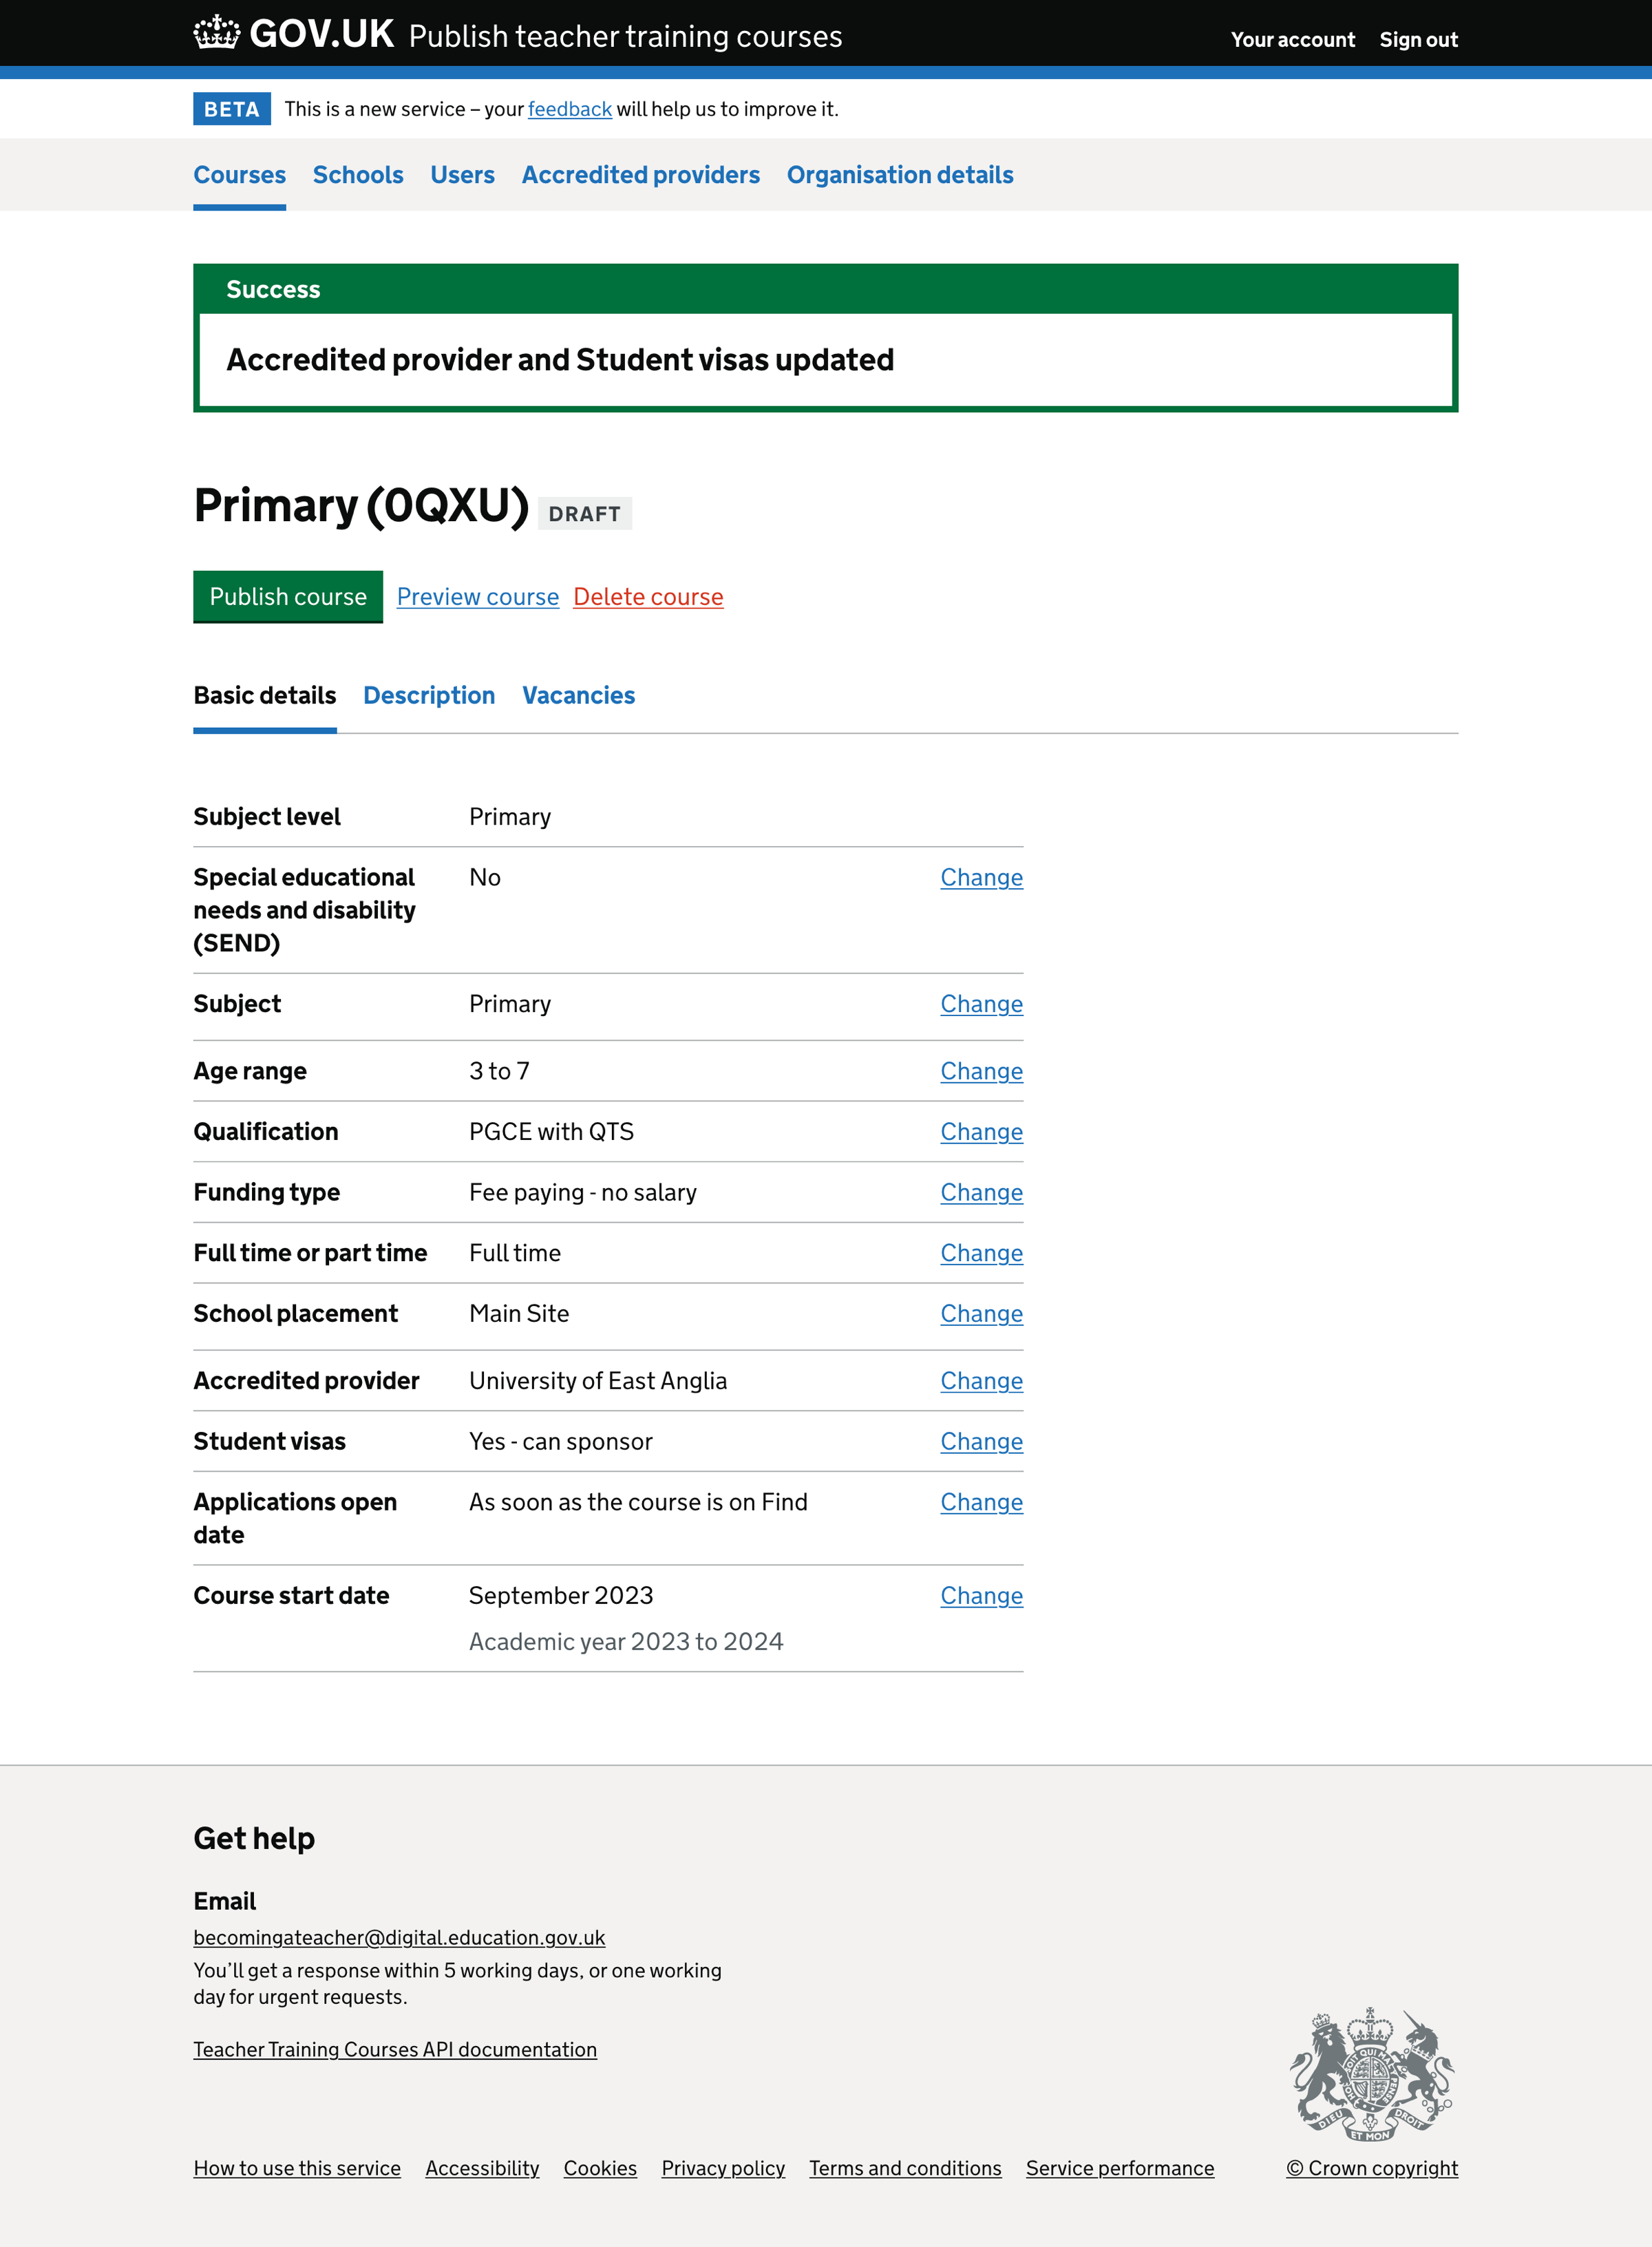 Screenshot of Accredited provider and visa updated